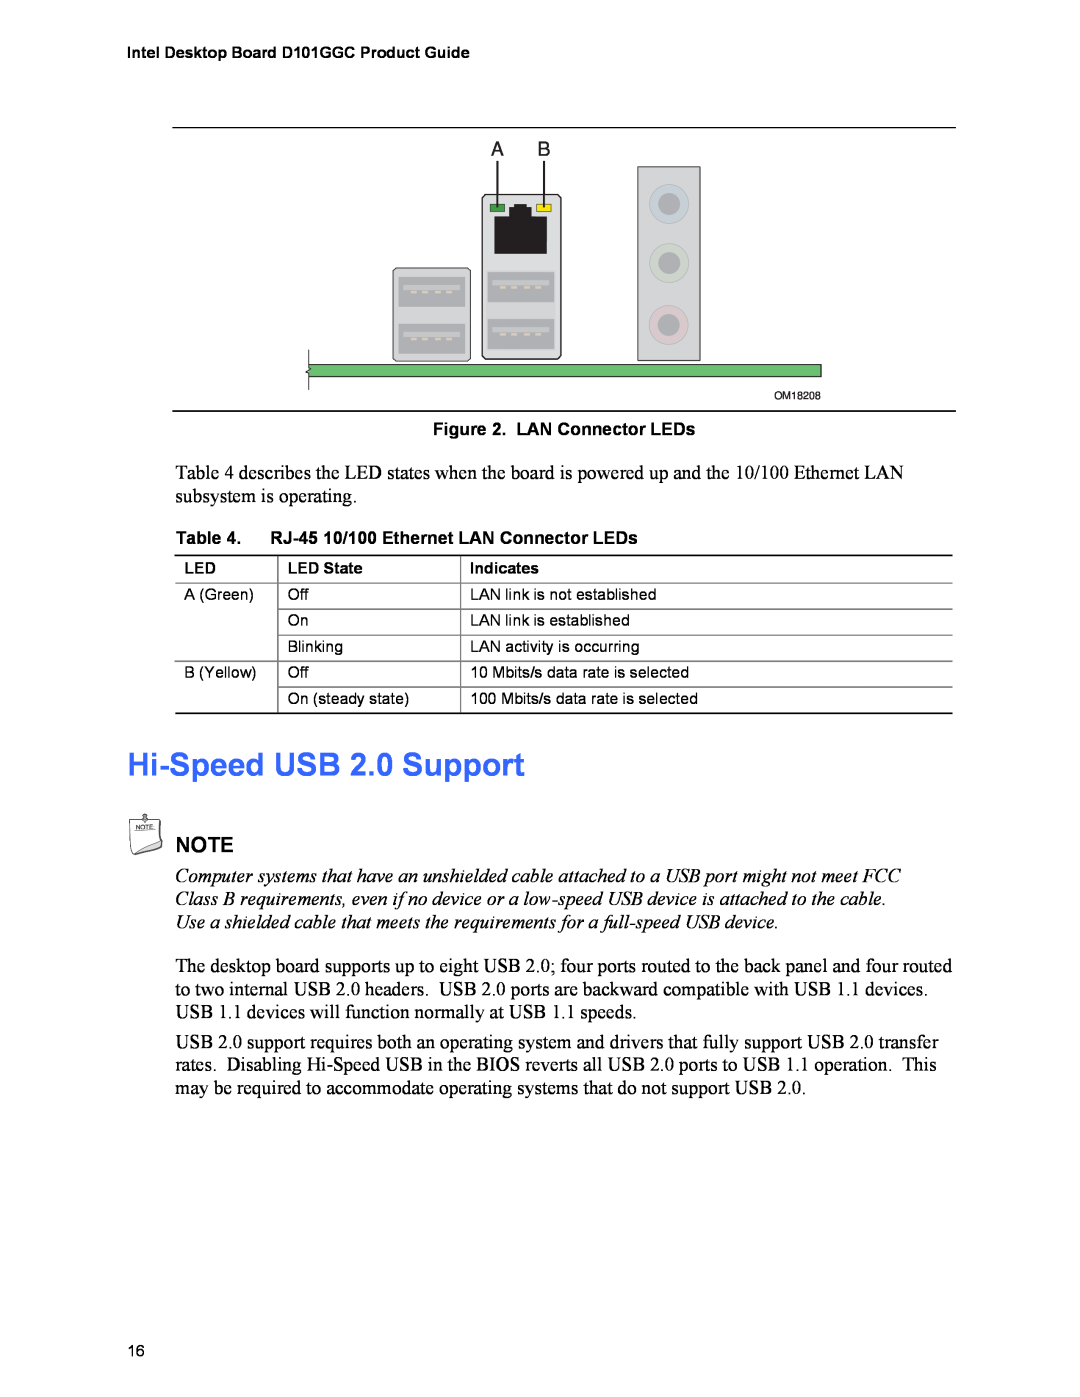 Intel D101GGC manual Hi-SpeedUSB 2.0 Support 